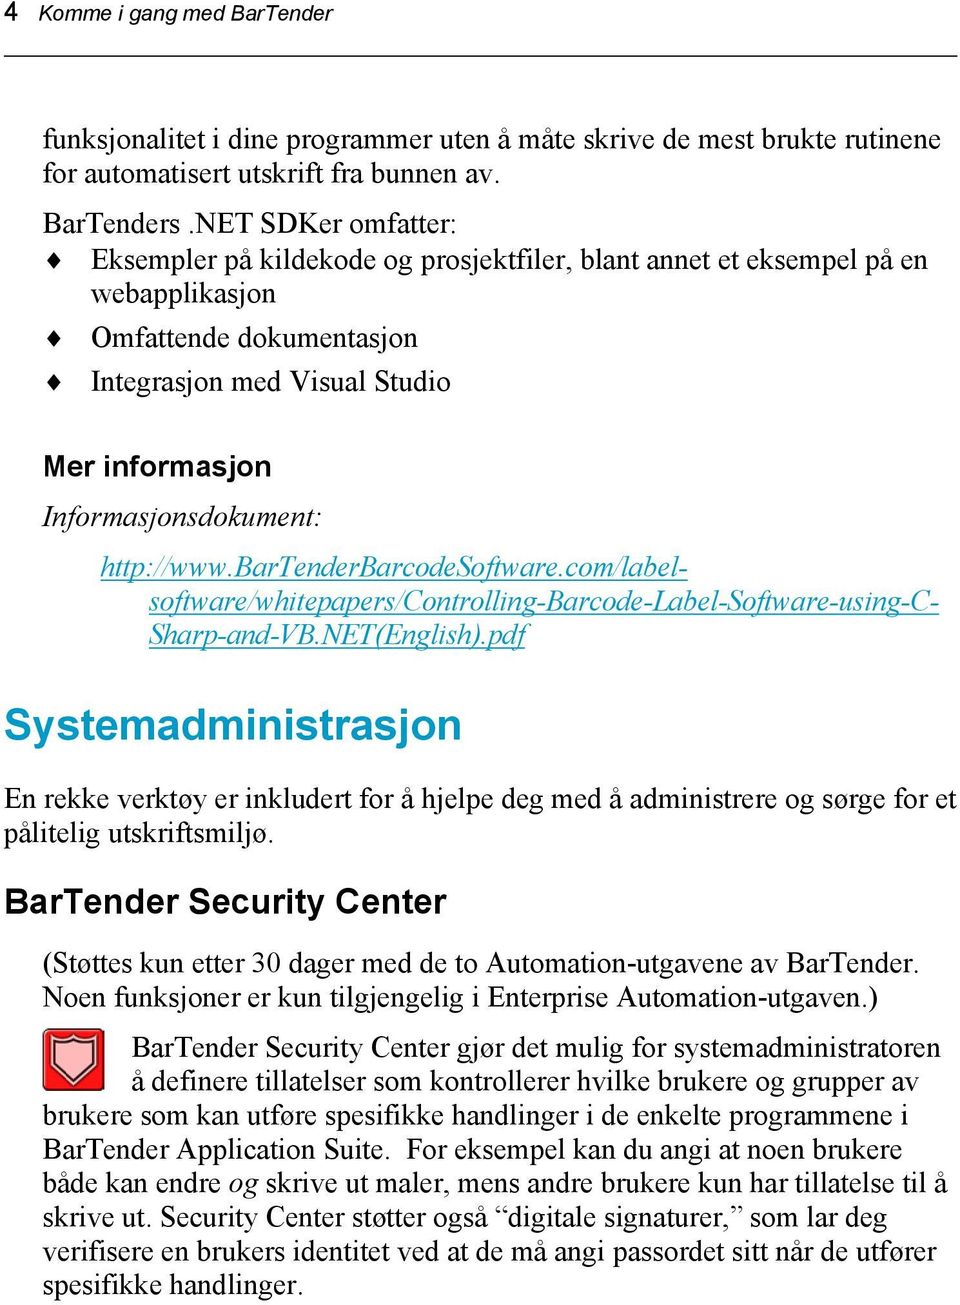 http://www.bartenderbarcodesoftware.com/label- software/whitepapers/controlling-barcode-label-software-using-c- Sharp-and-VB.NET(English).